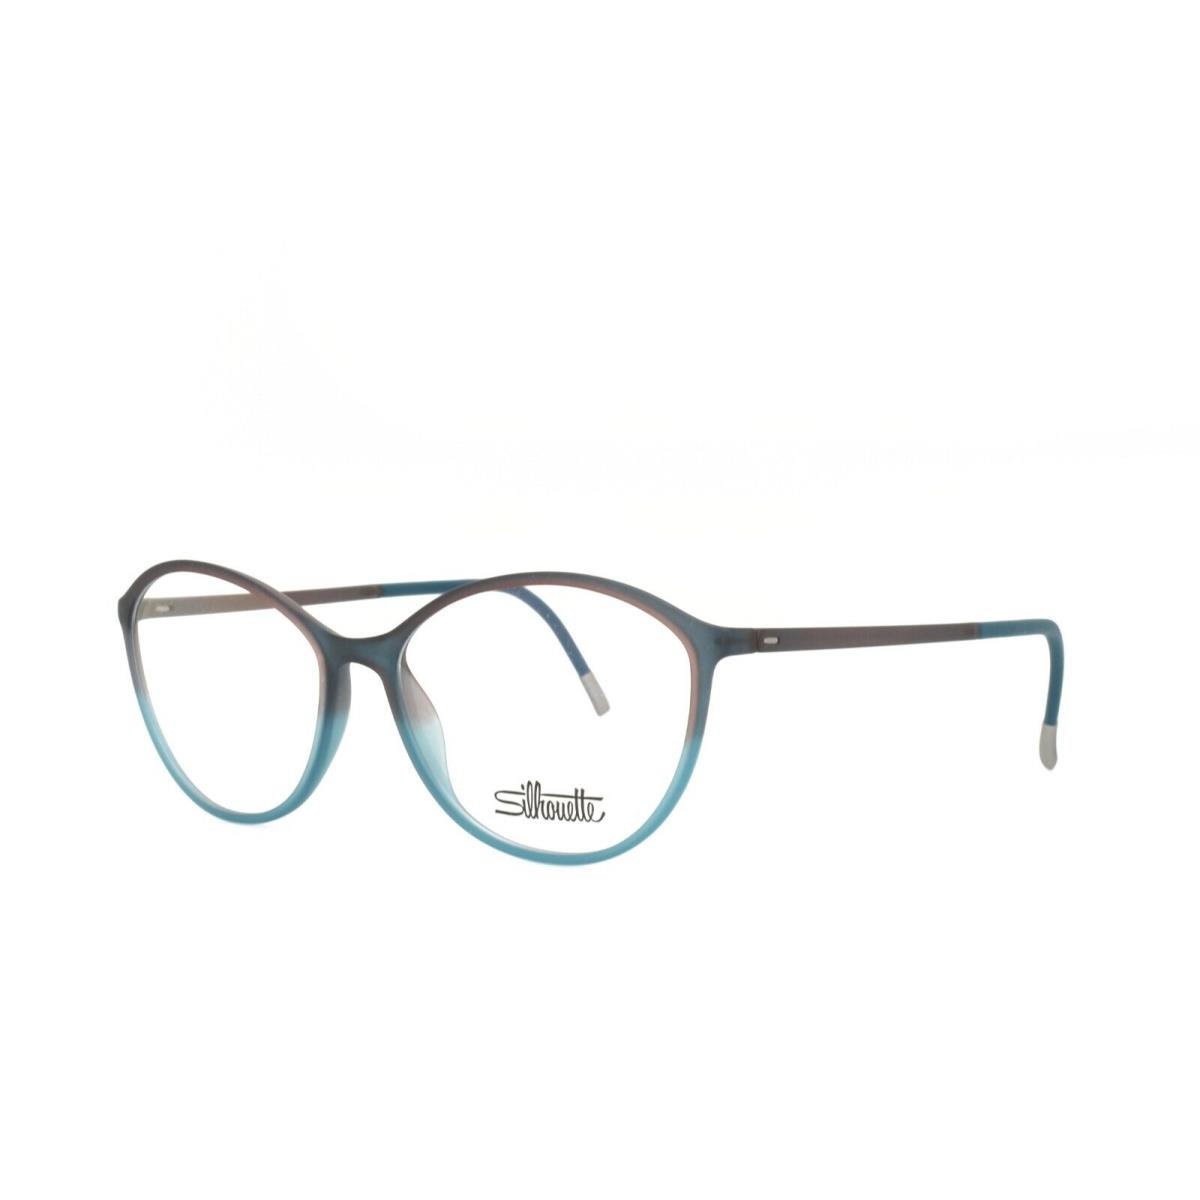 Silhouette Spx Illusion 1584 75 4210 Eyeglasses 54-15-135 Petrol Turquoise - Petrol Frame